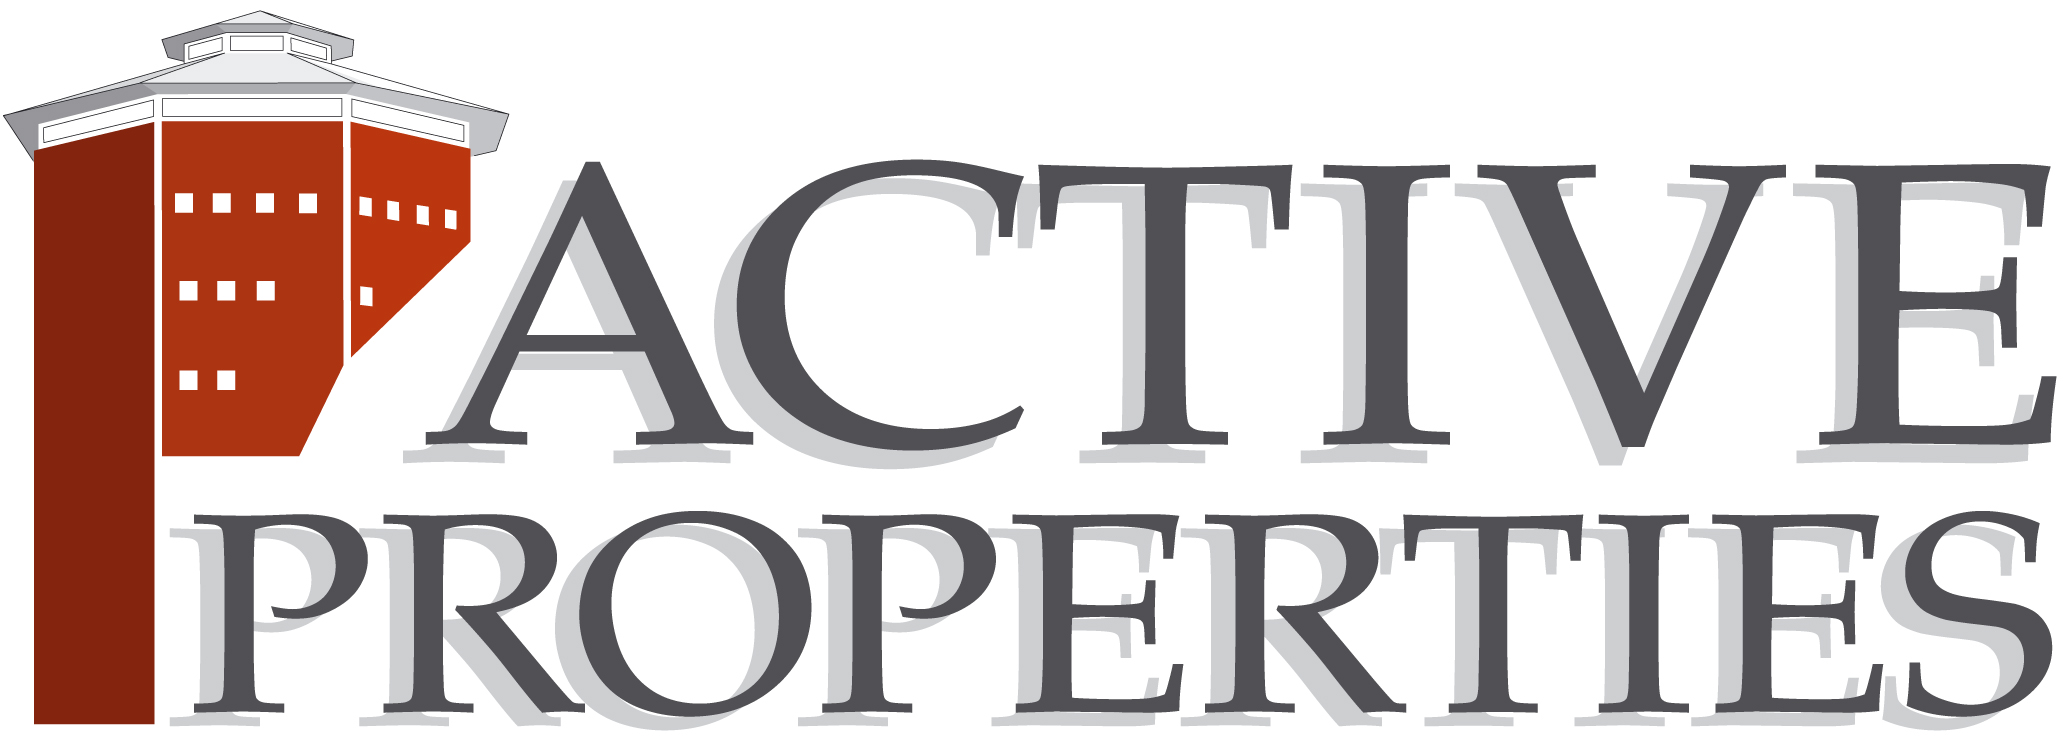 Active Properties B logo image